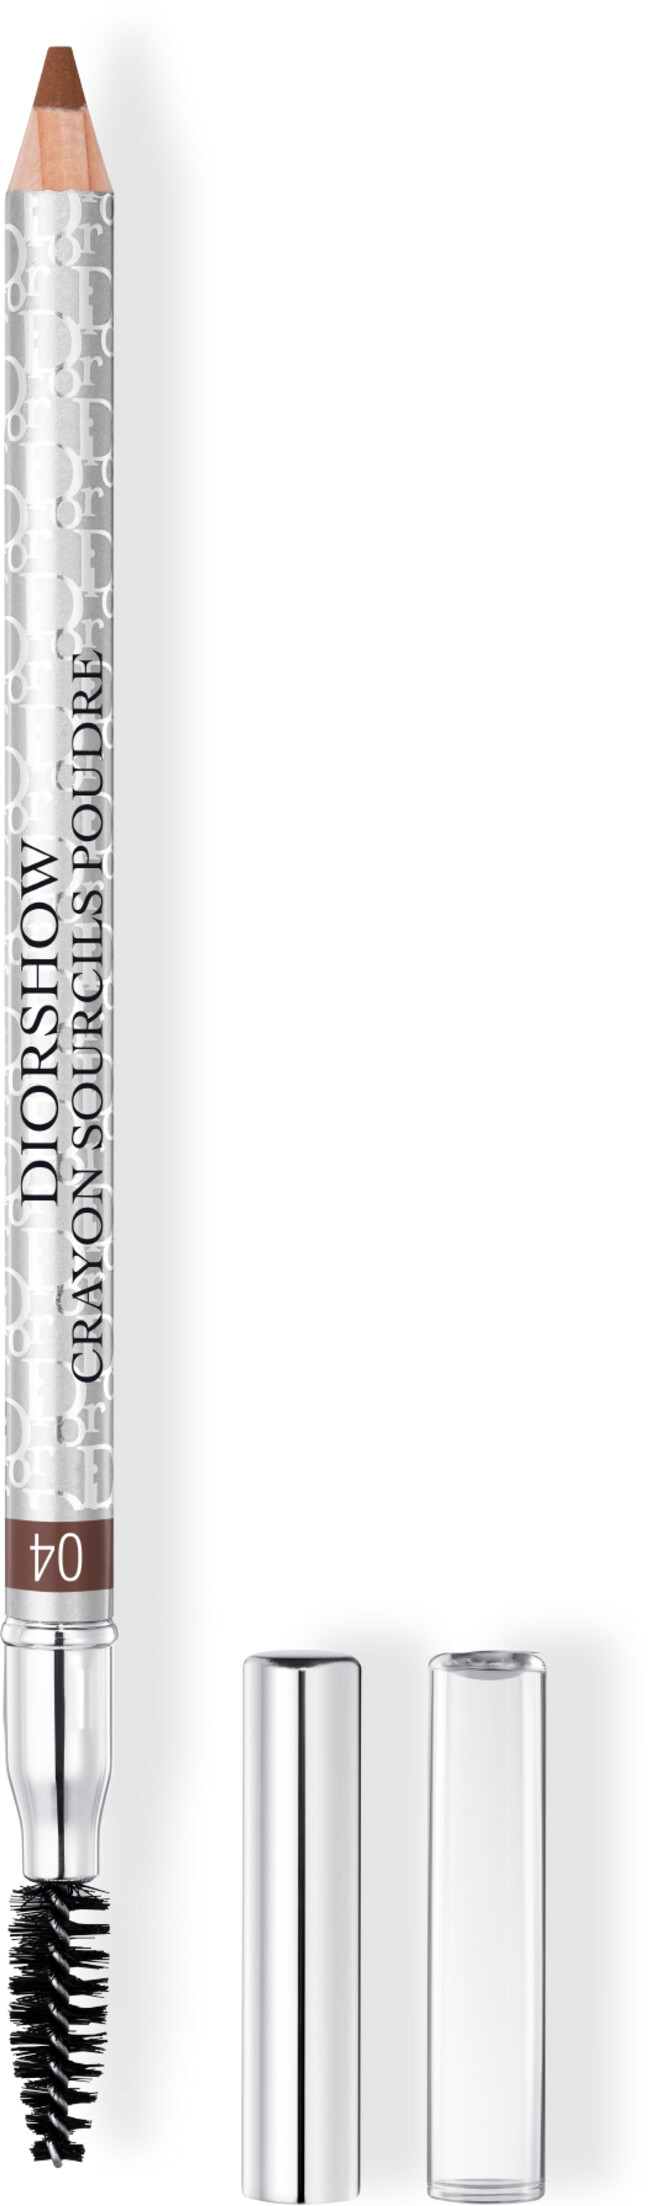 DIOR Diorshow Crayons Sourcils Poudre Eyebrow Pencil 1.19g 04 -  Auburn